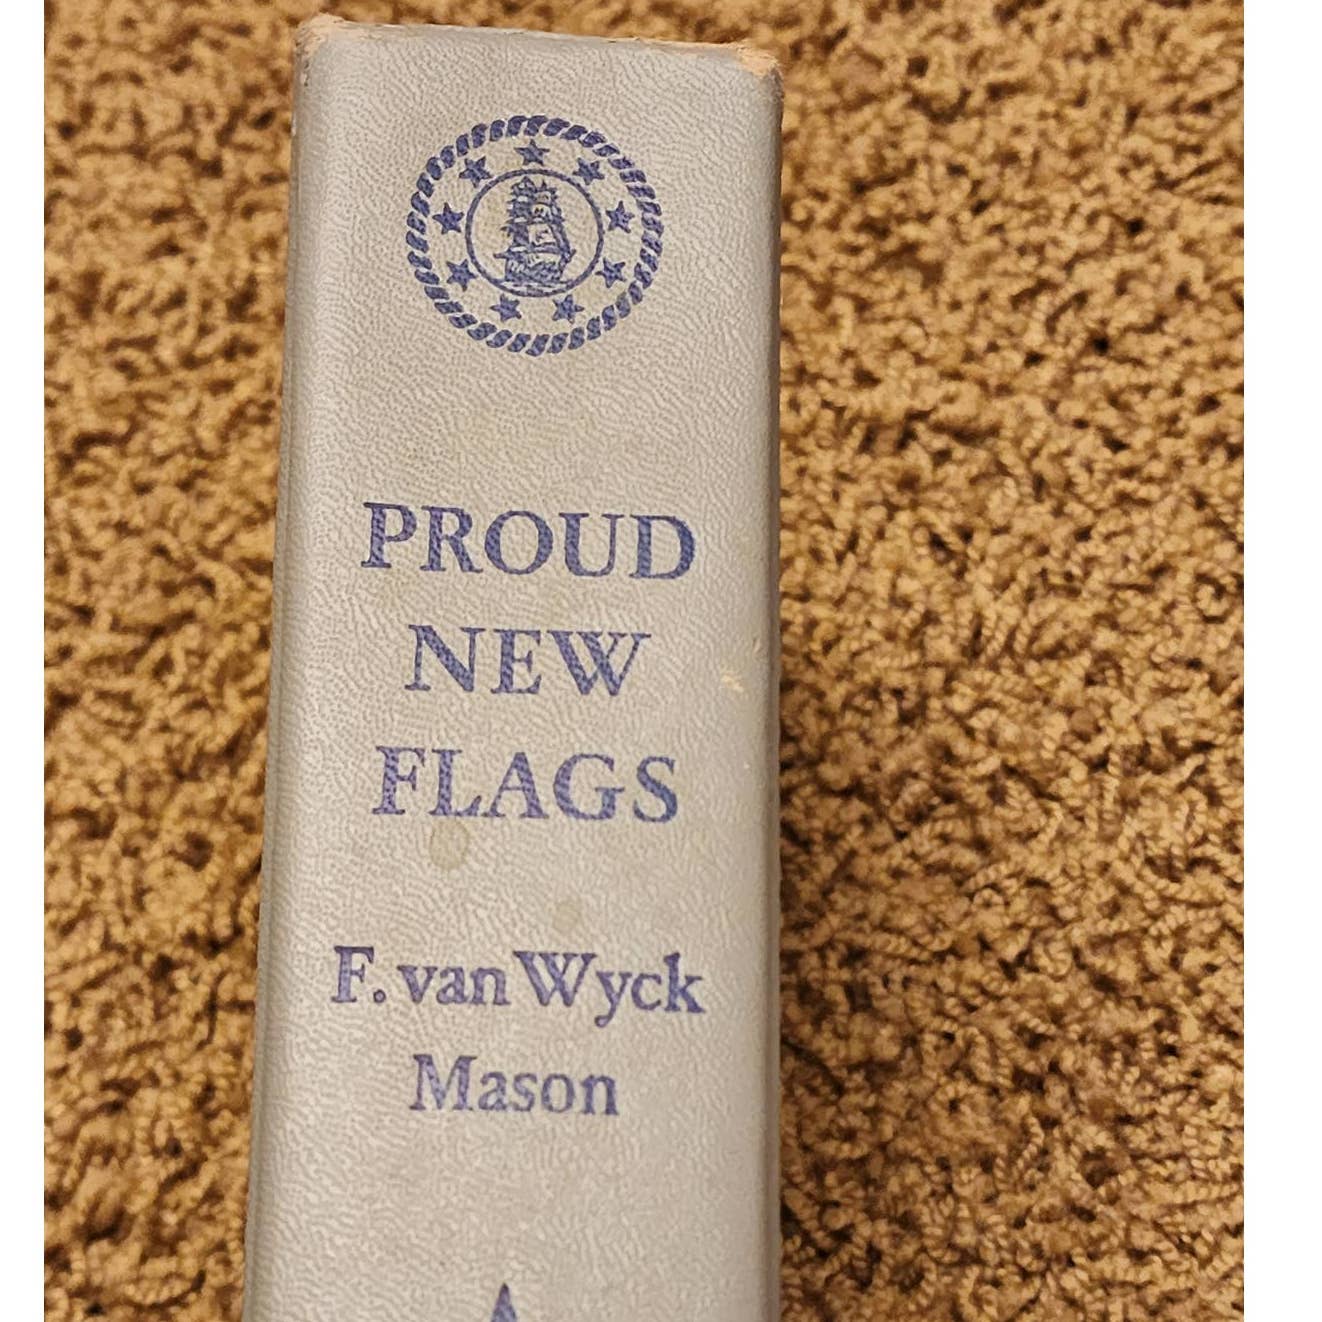 Proud New Flags by F. Van Wyck Mason, Historical Romance Civil War, 1st Ed 1951